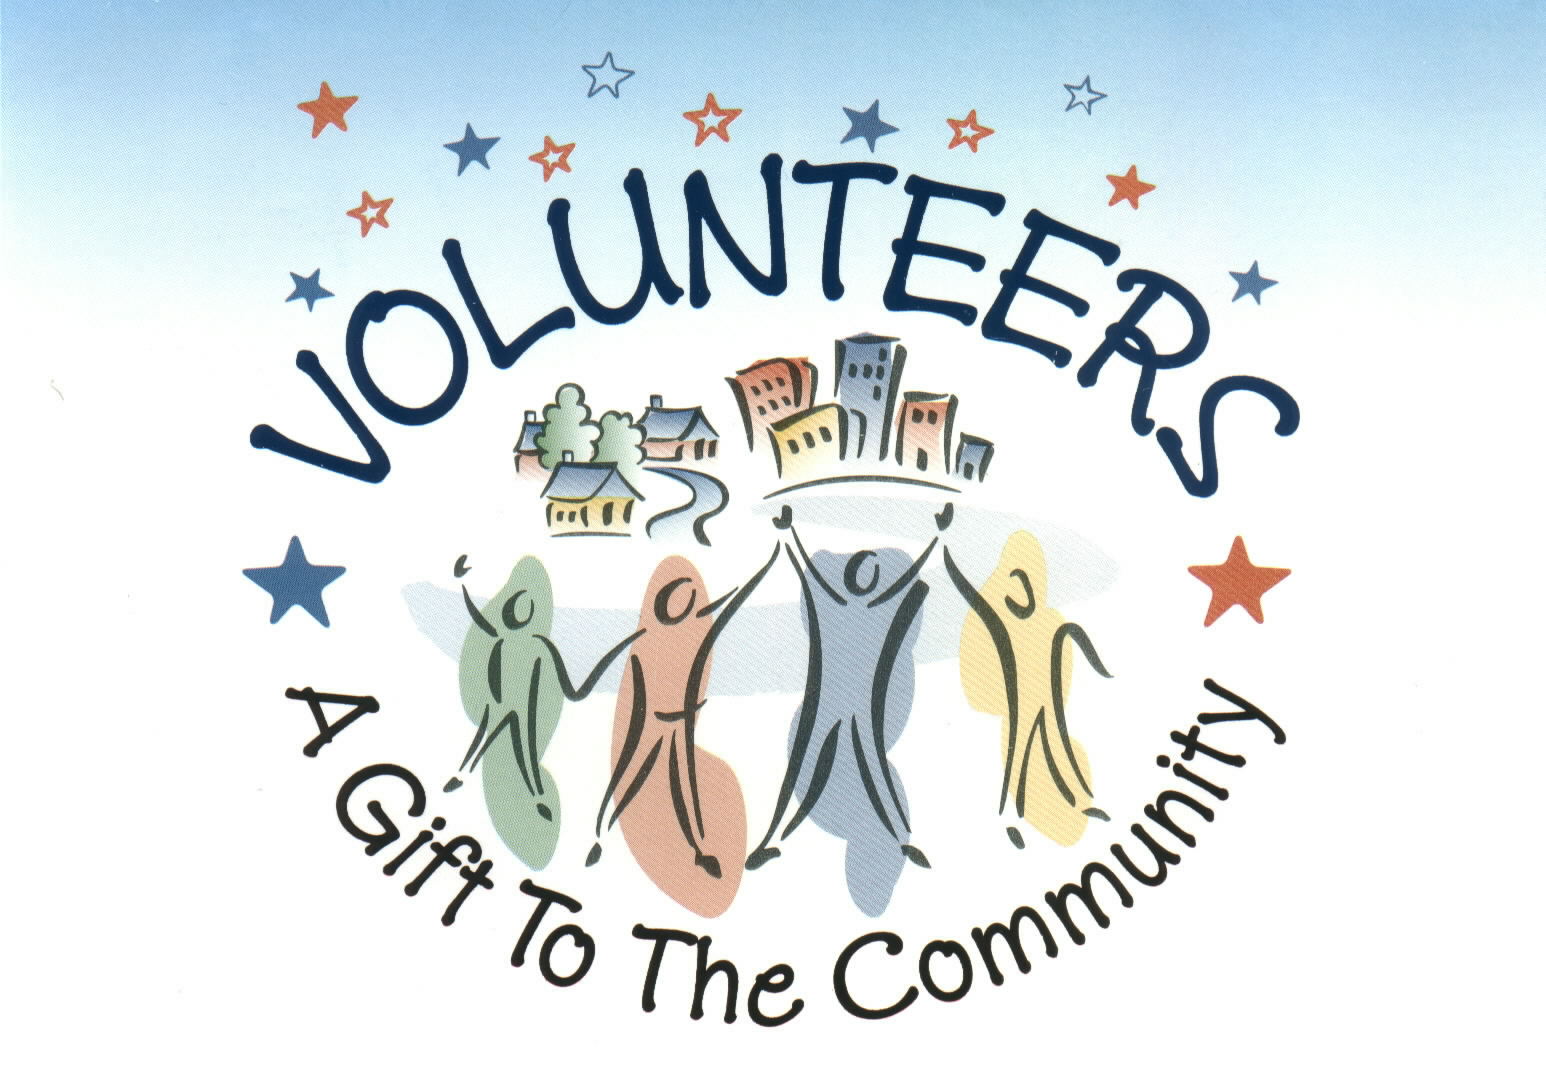 Free cliparts download clip. Volunteering clipart volunteer opportunity